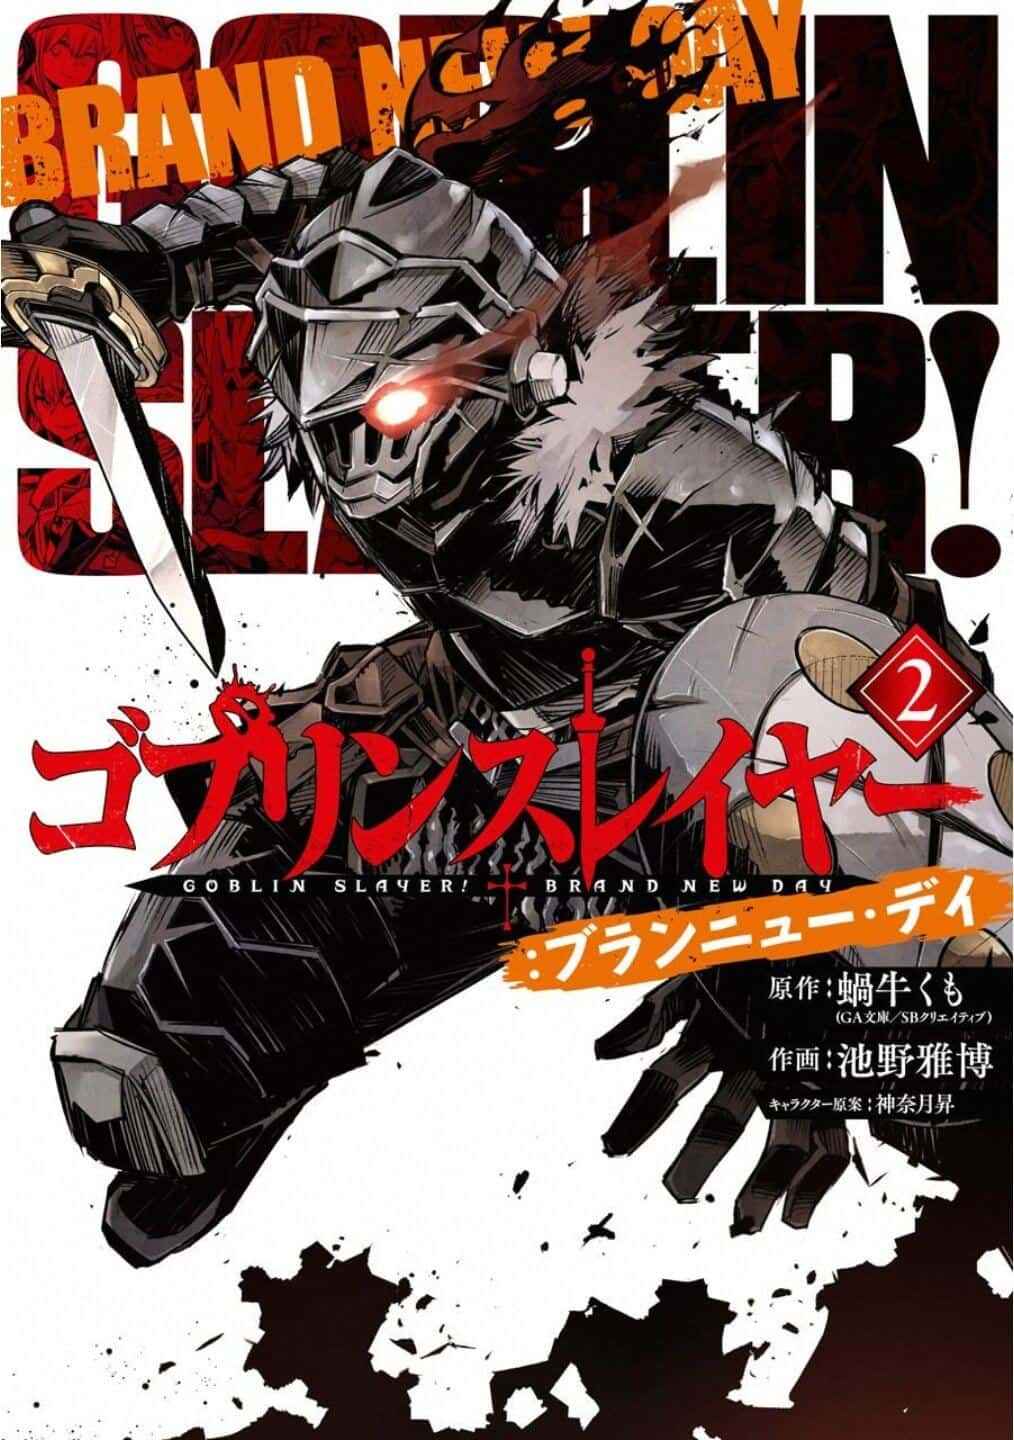 Descargar Goblin Slayer Brand New Day Manga PDF MEGA